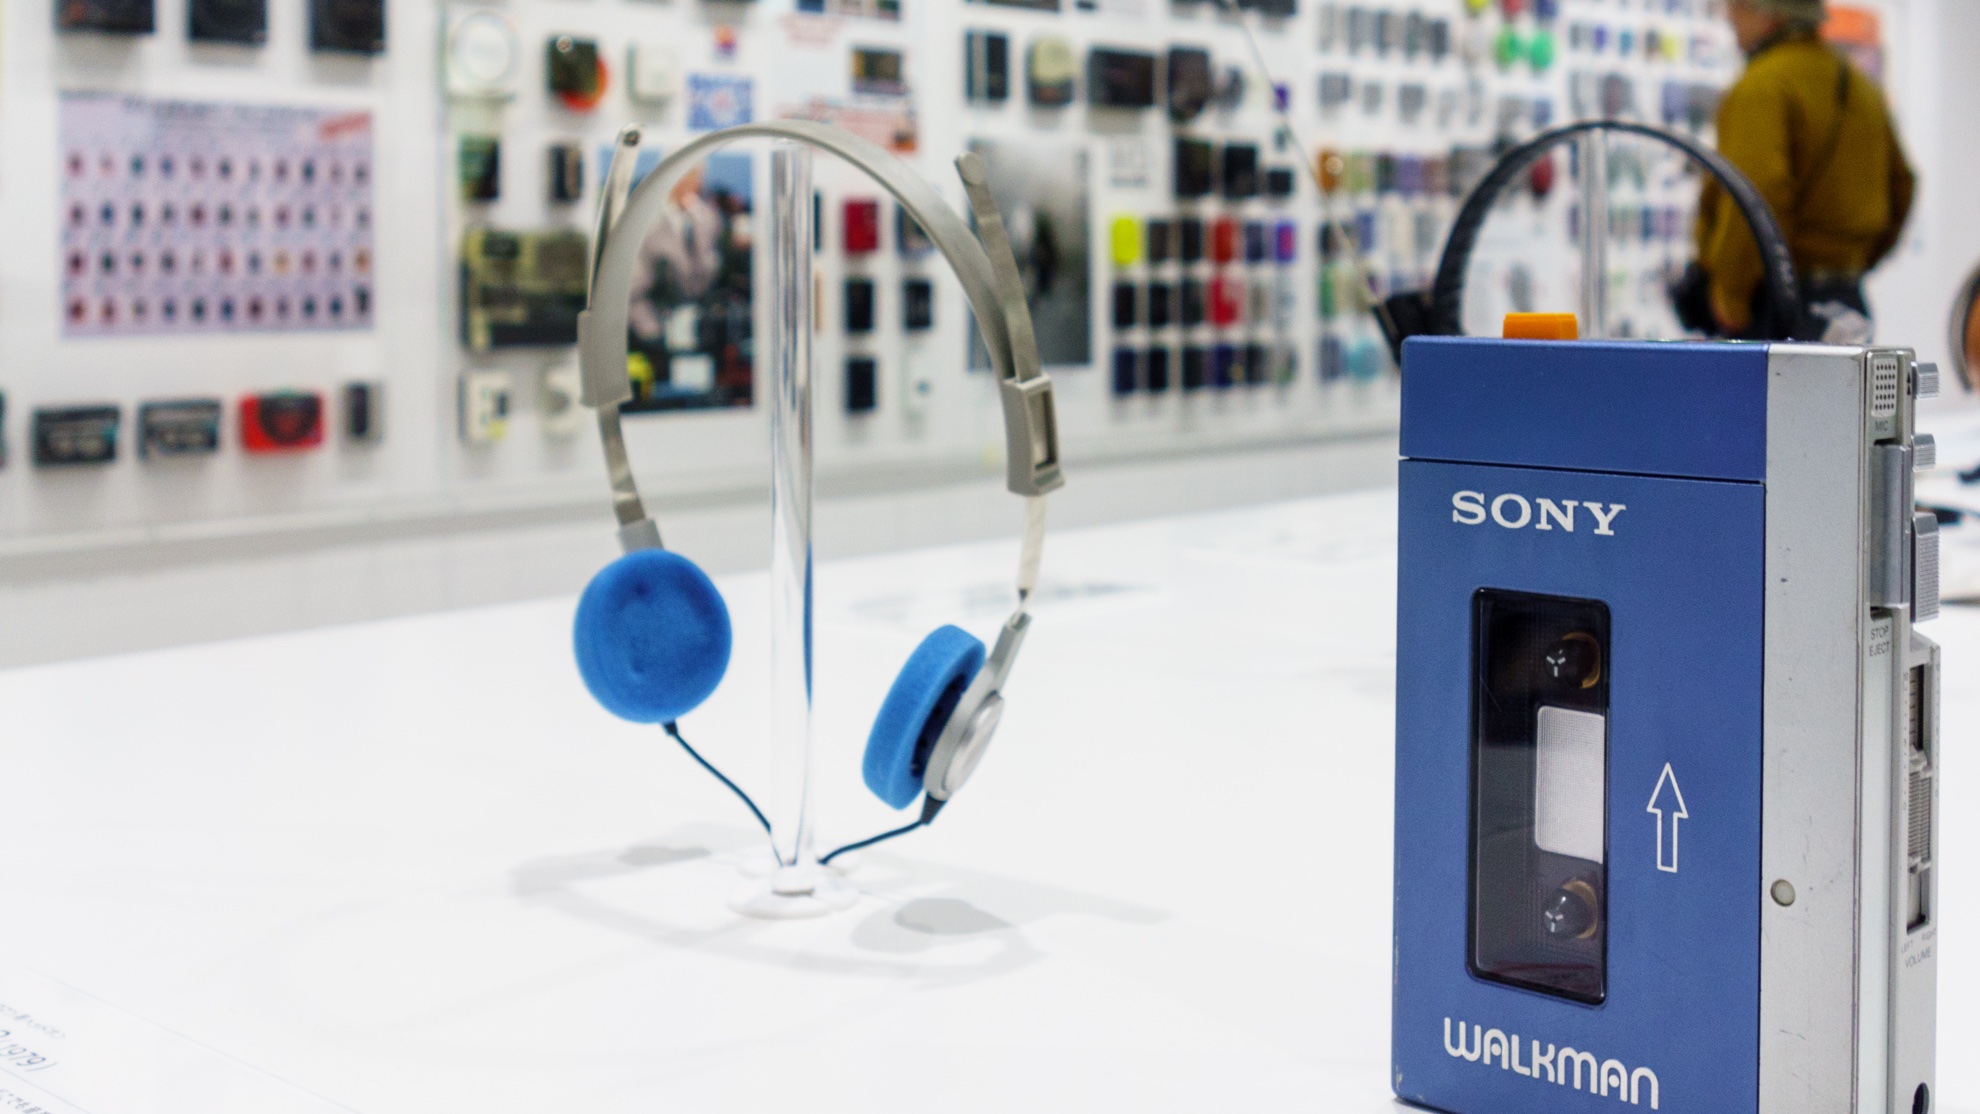 Sony Walkman with a pair of headphones